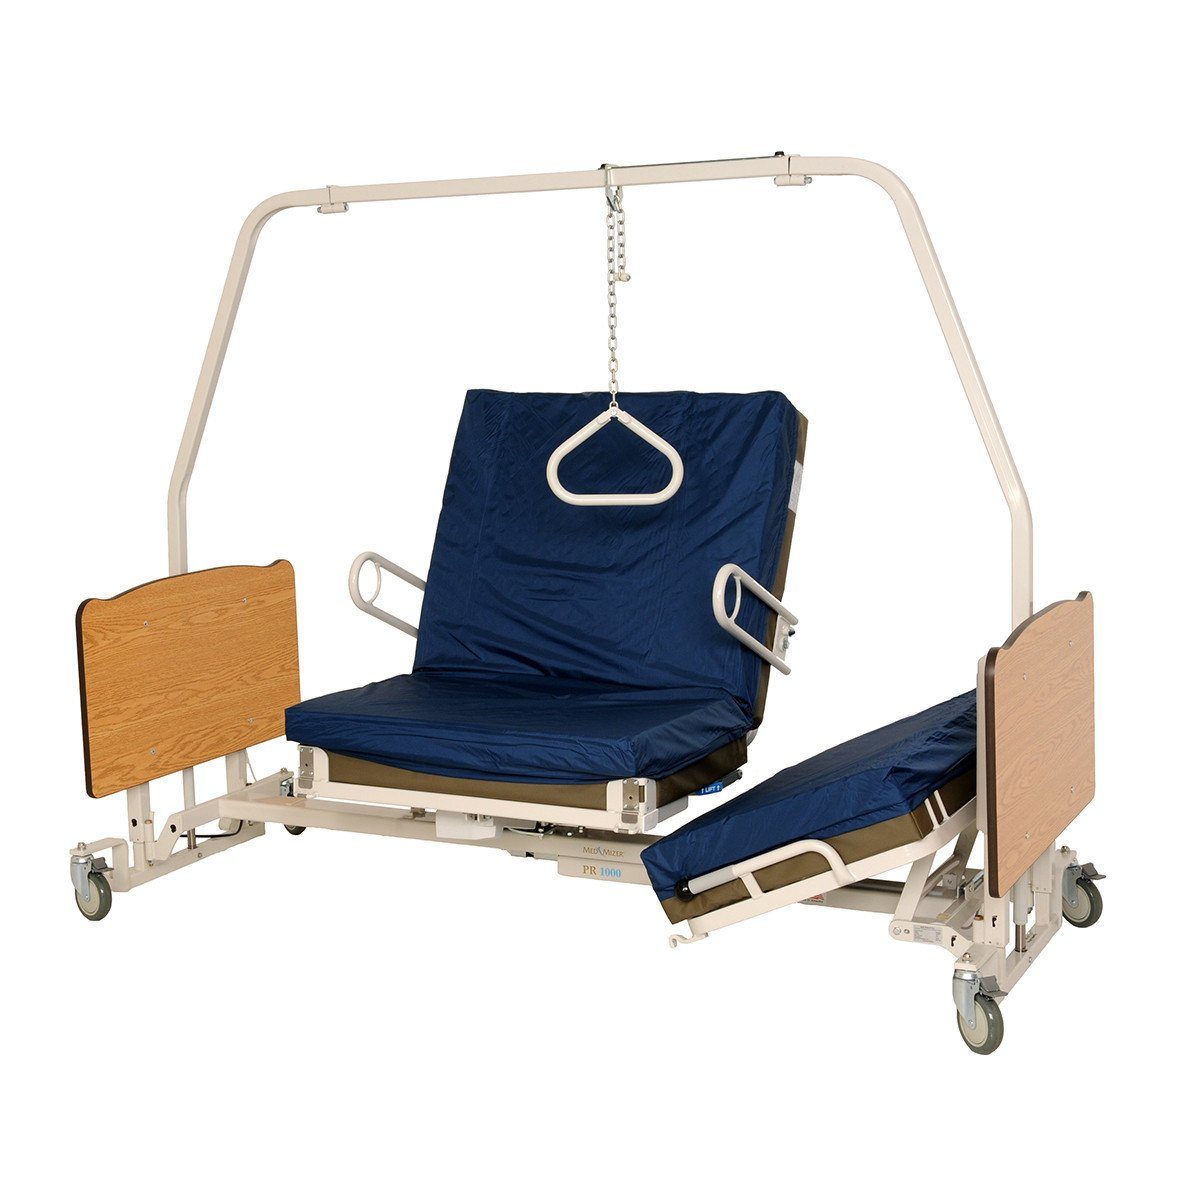 Optional Trapeze - Express Hospital Beds